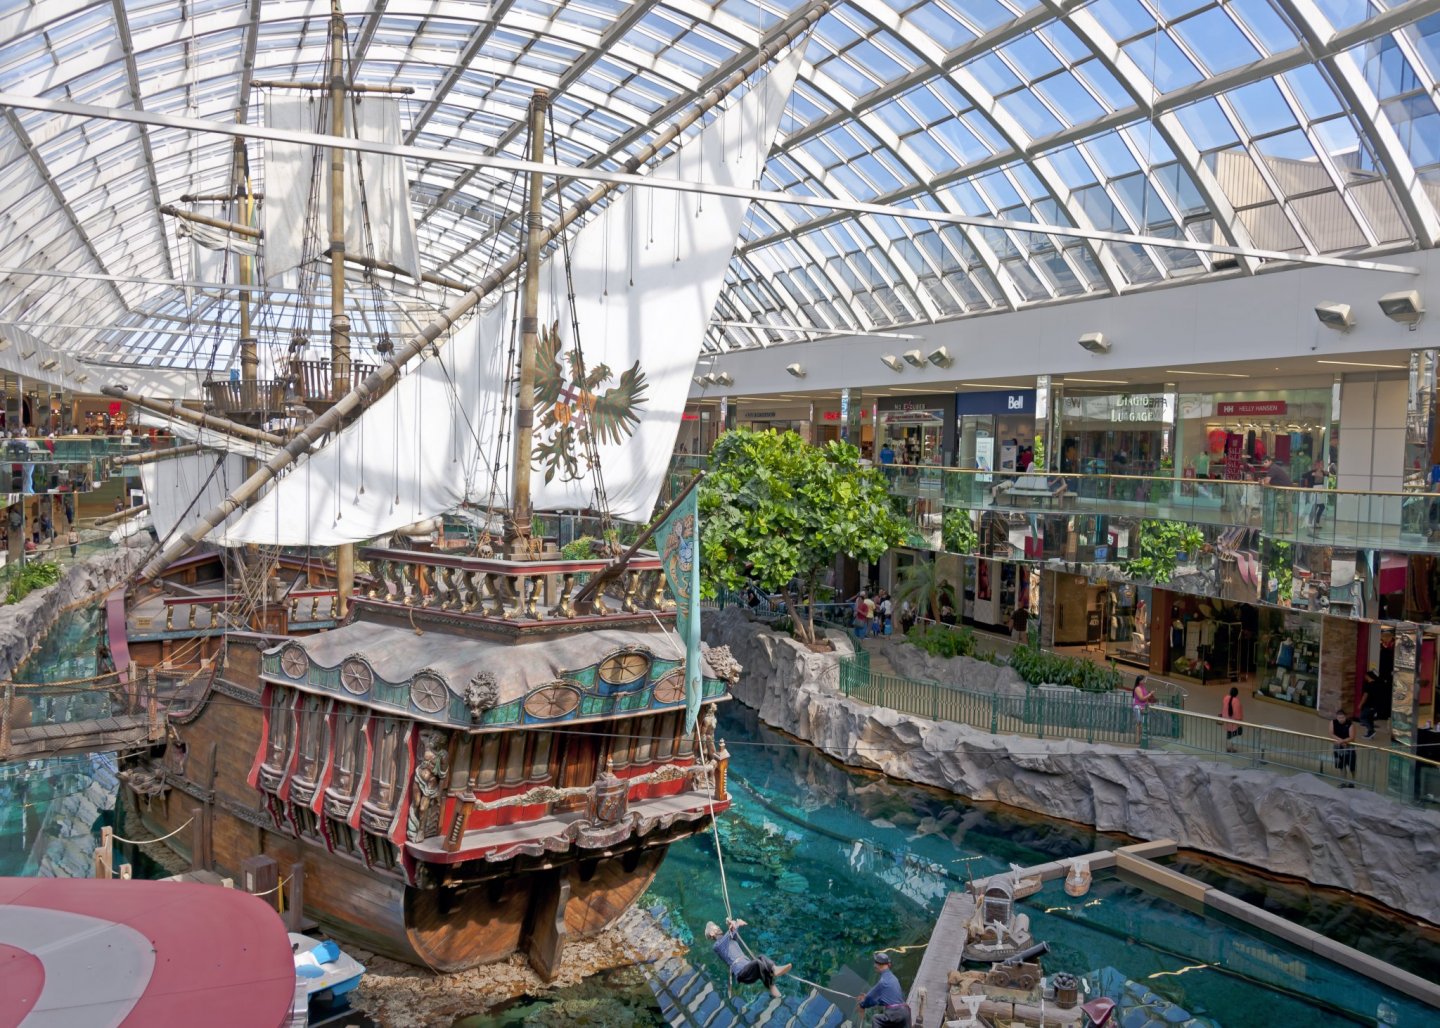 Pirate_ship_in_the_West_Edmonton_Mall.thumb.jpg.21e19dda37e18b7b2e12ea19266daf5a.jpg